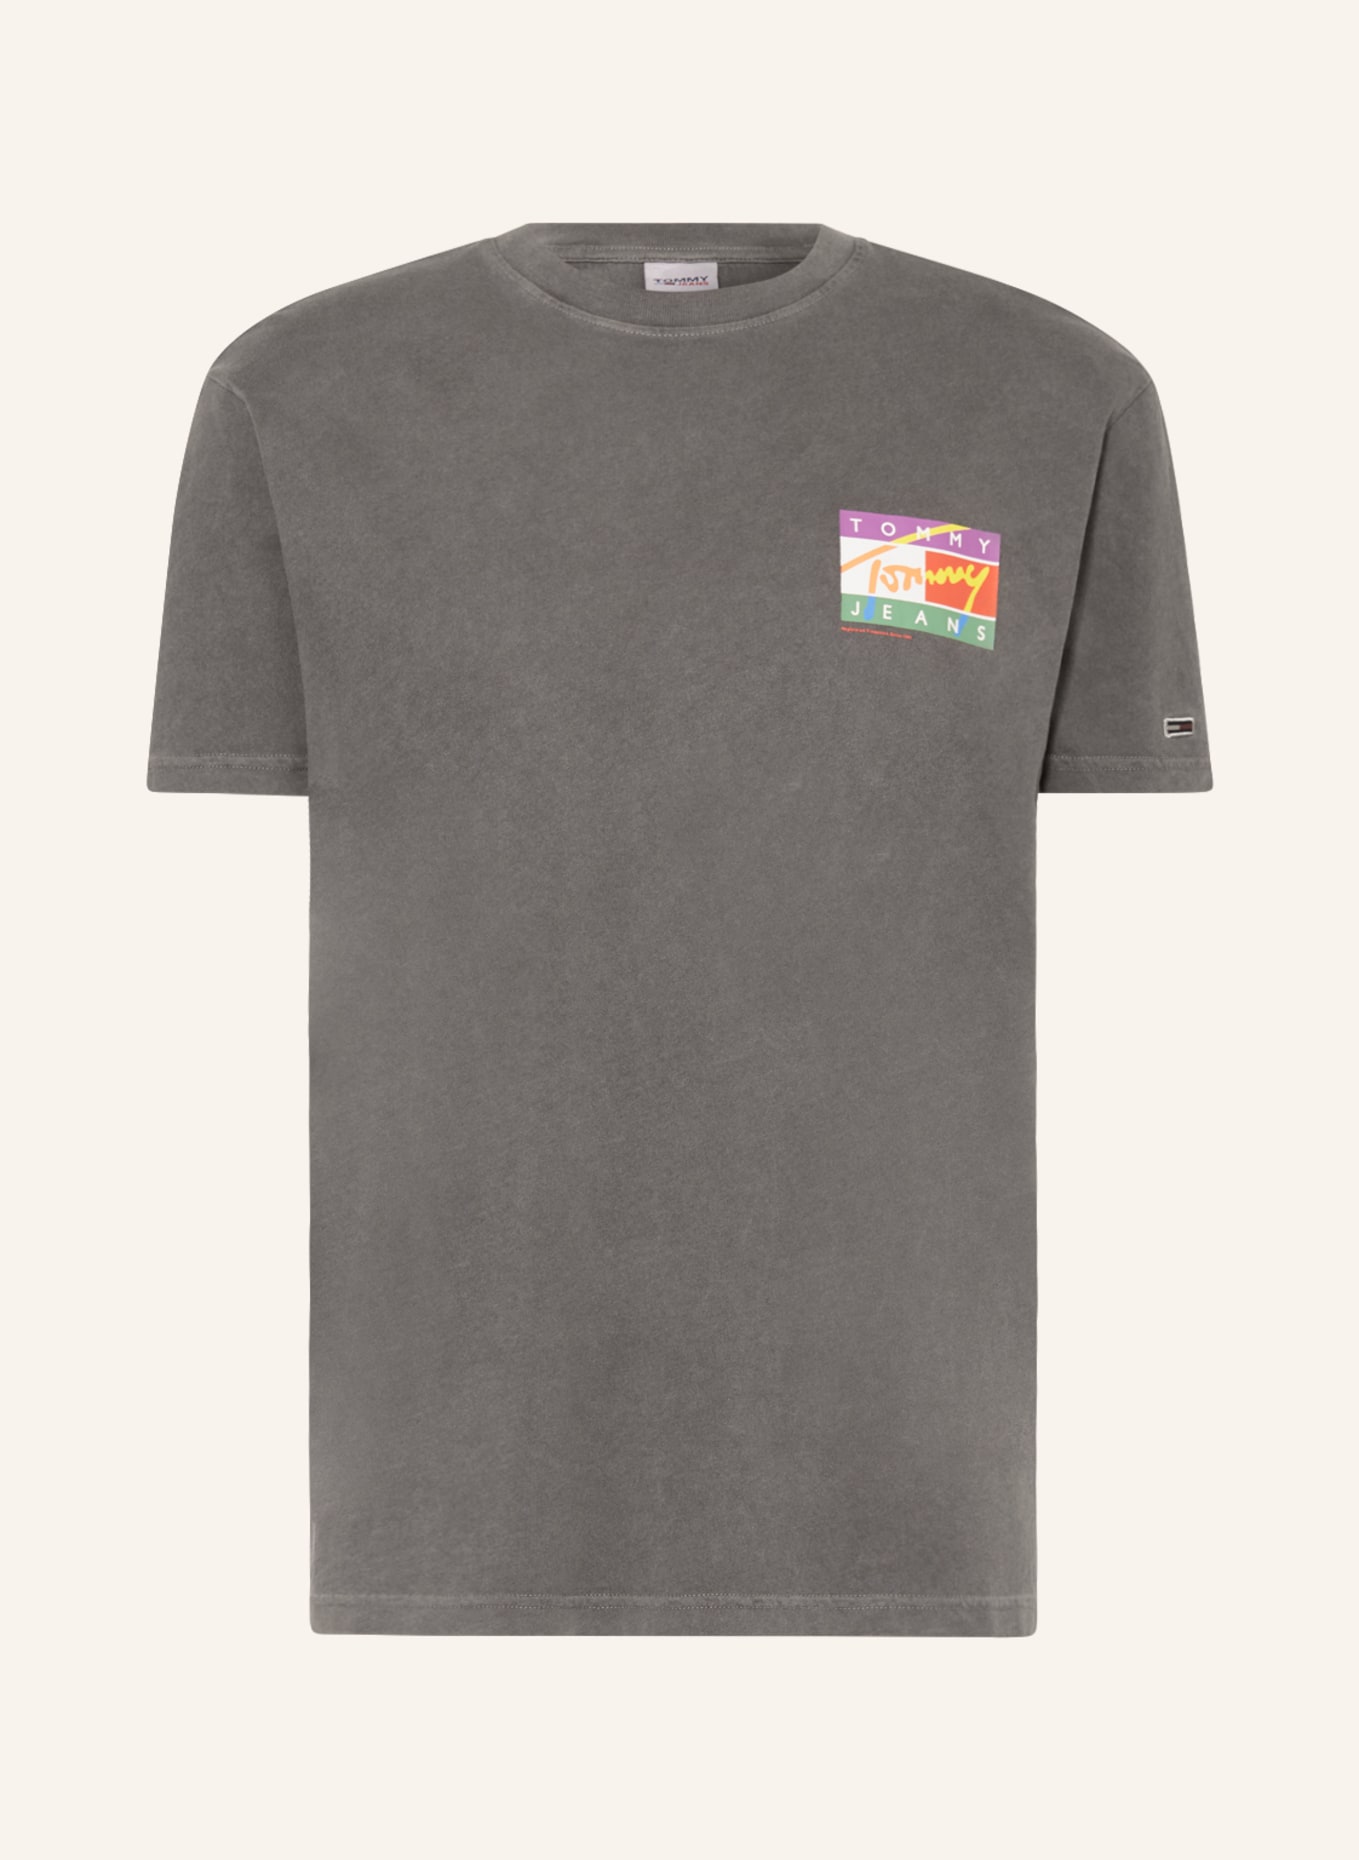 TOMMY JEANS T-Shirt, Farbe: SCHWARZ (Bild 1)